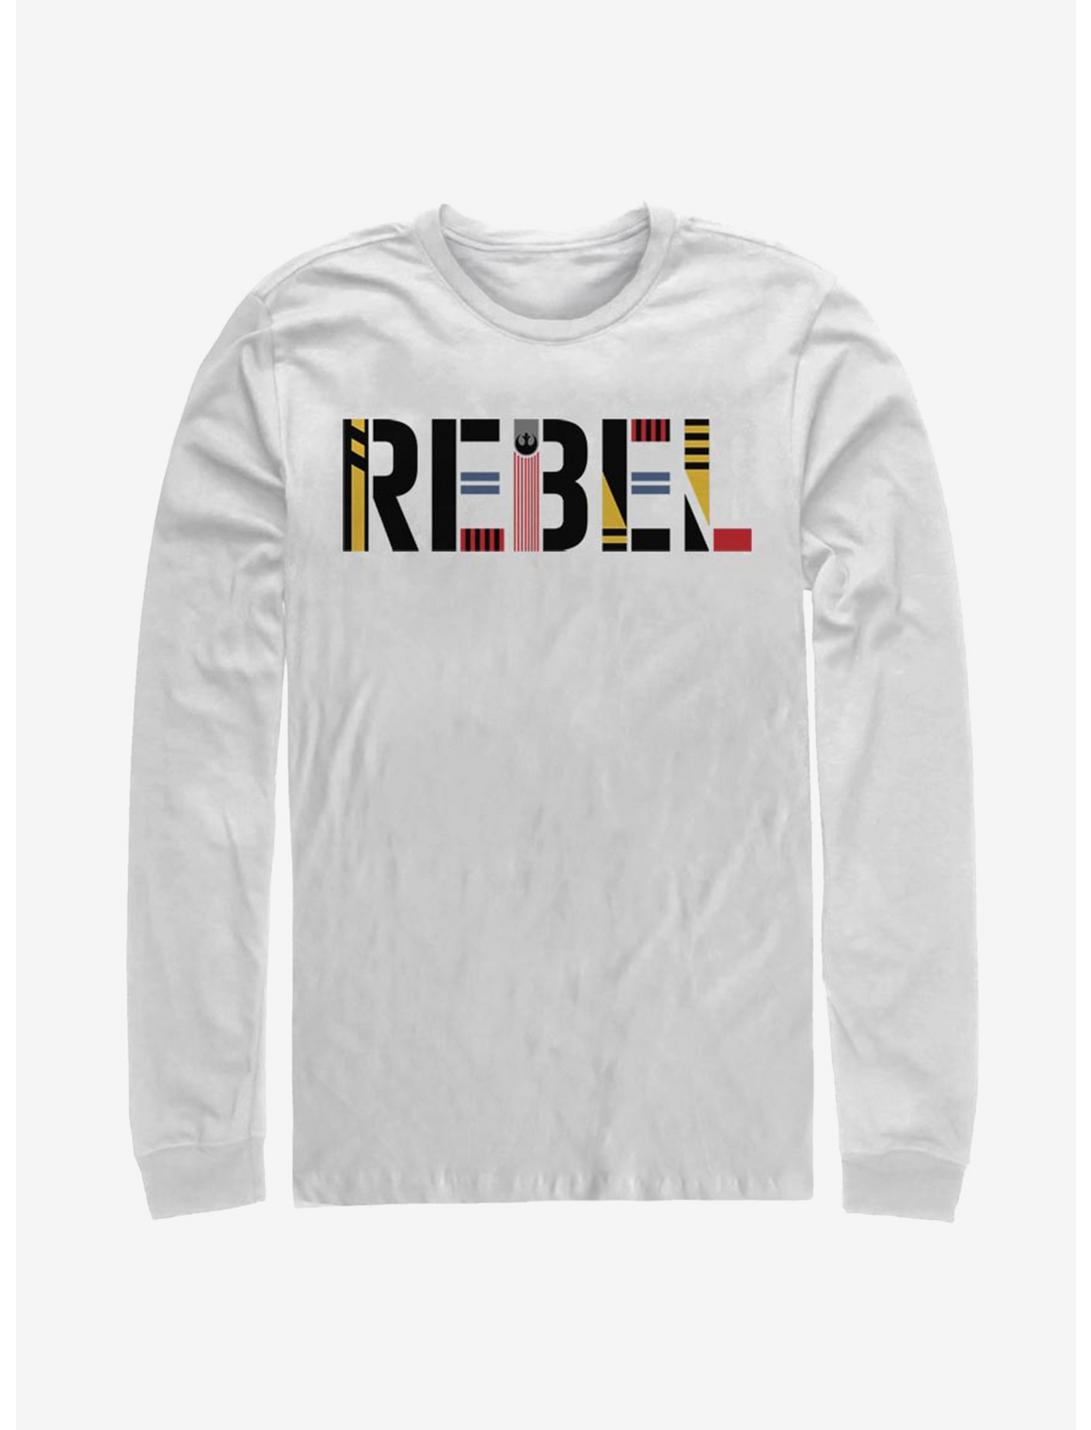 Star Wars Episode IX The Rise Of Skywalker Rebel Simple Long-Sleeve T-Shirt, WHITE, hi-res